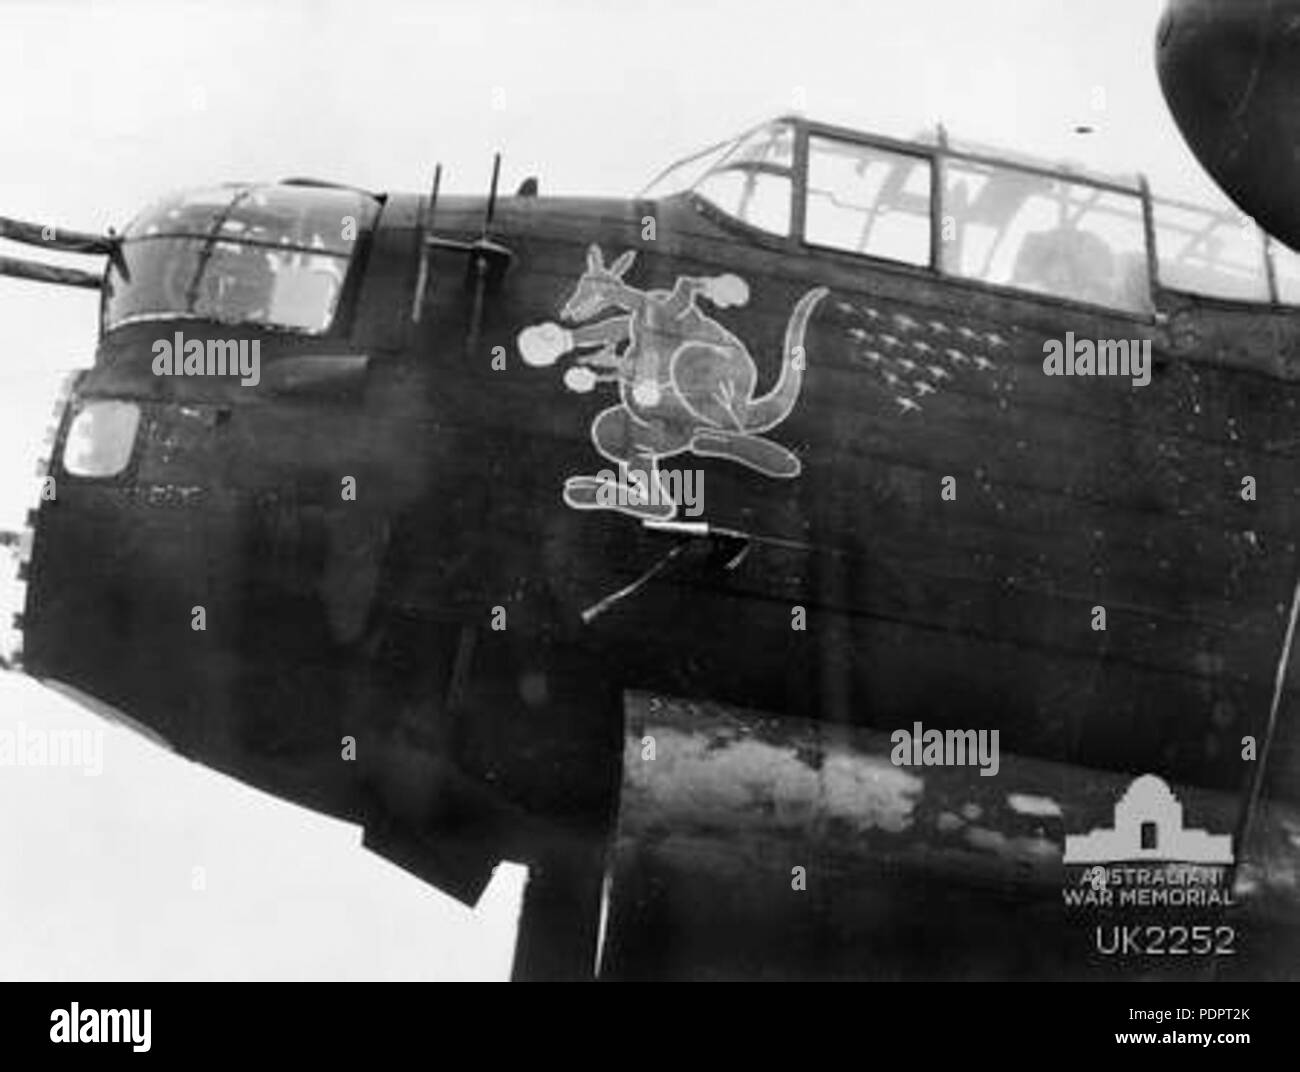 7 463 Squadron RAAF Lancaster nose art Waddington Dec 1944 AWM UK2252 Stock Photo